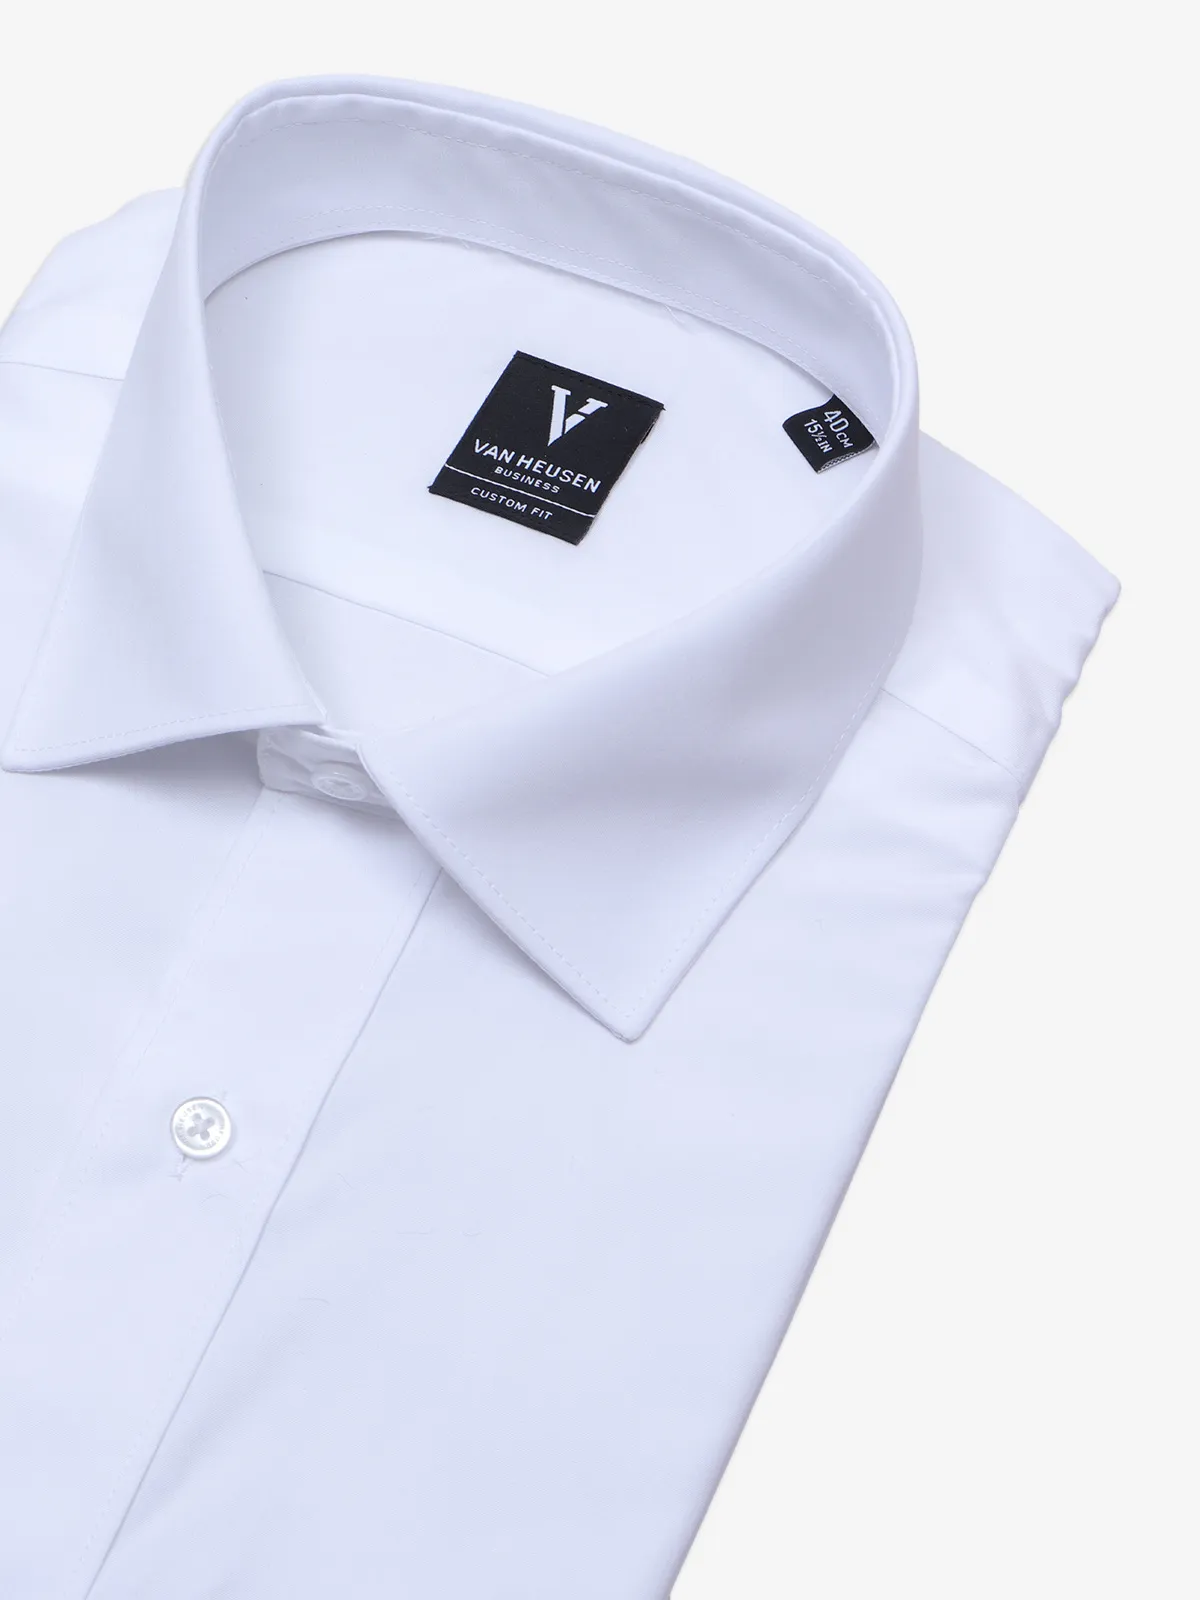 Van Heusen plain white shirt